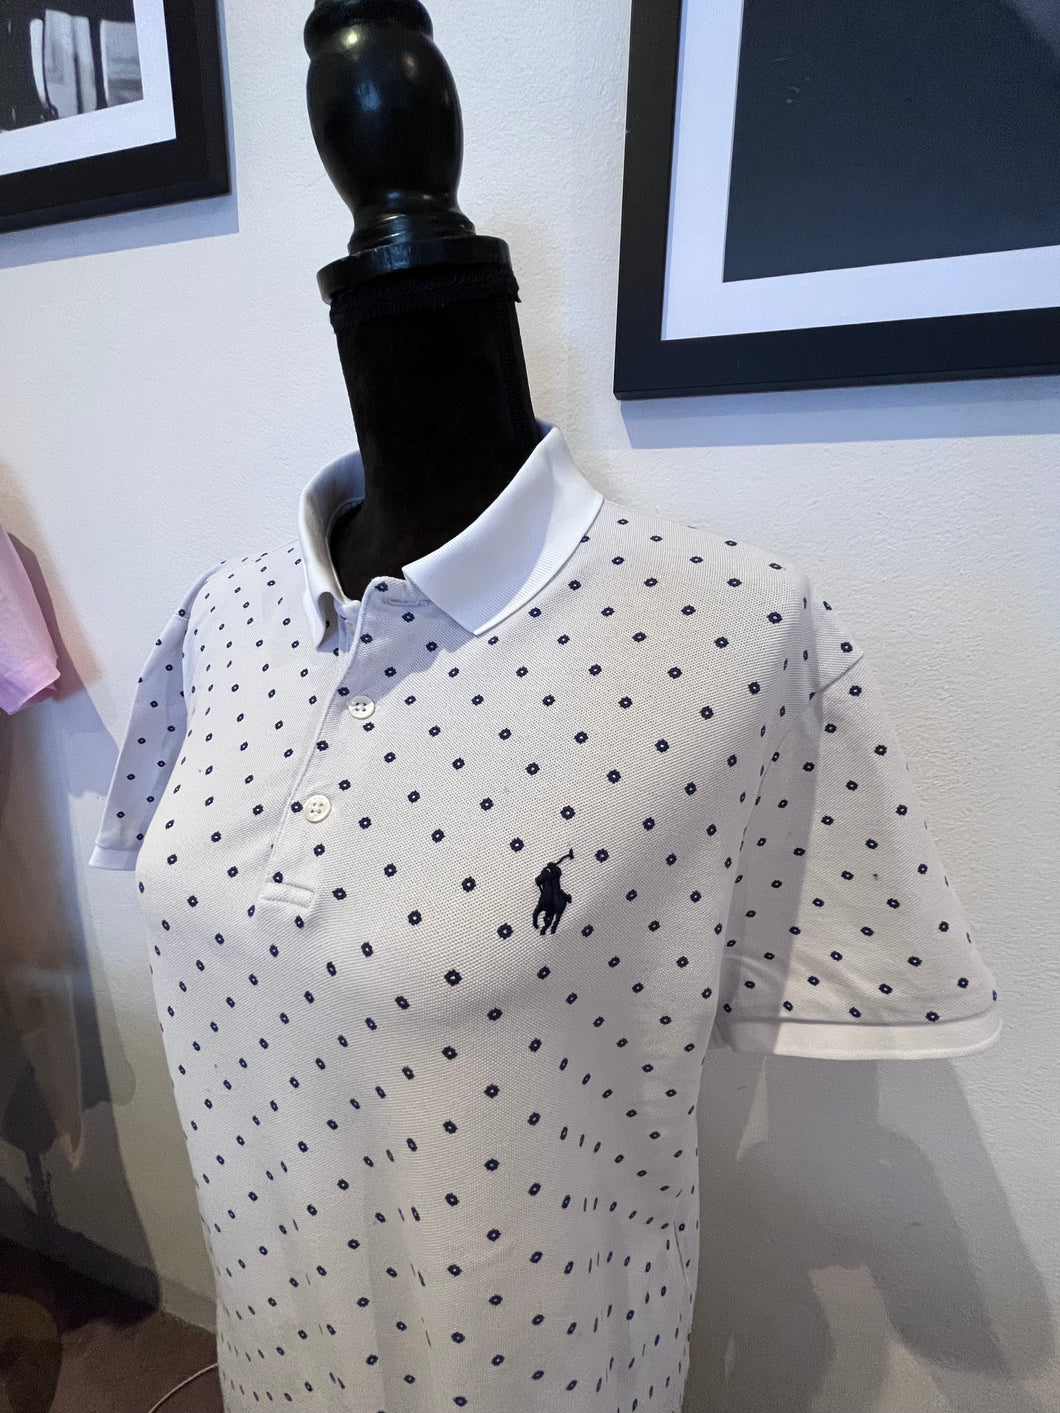 Ralph Lauren 100% Cotton Women’s White Pattern Polo Shirt Size Large